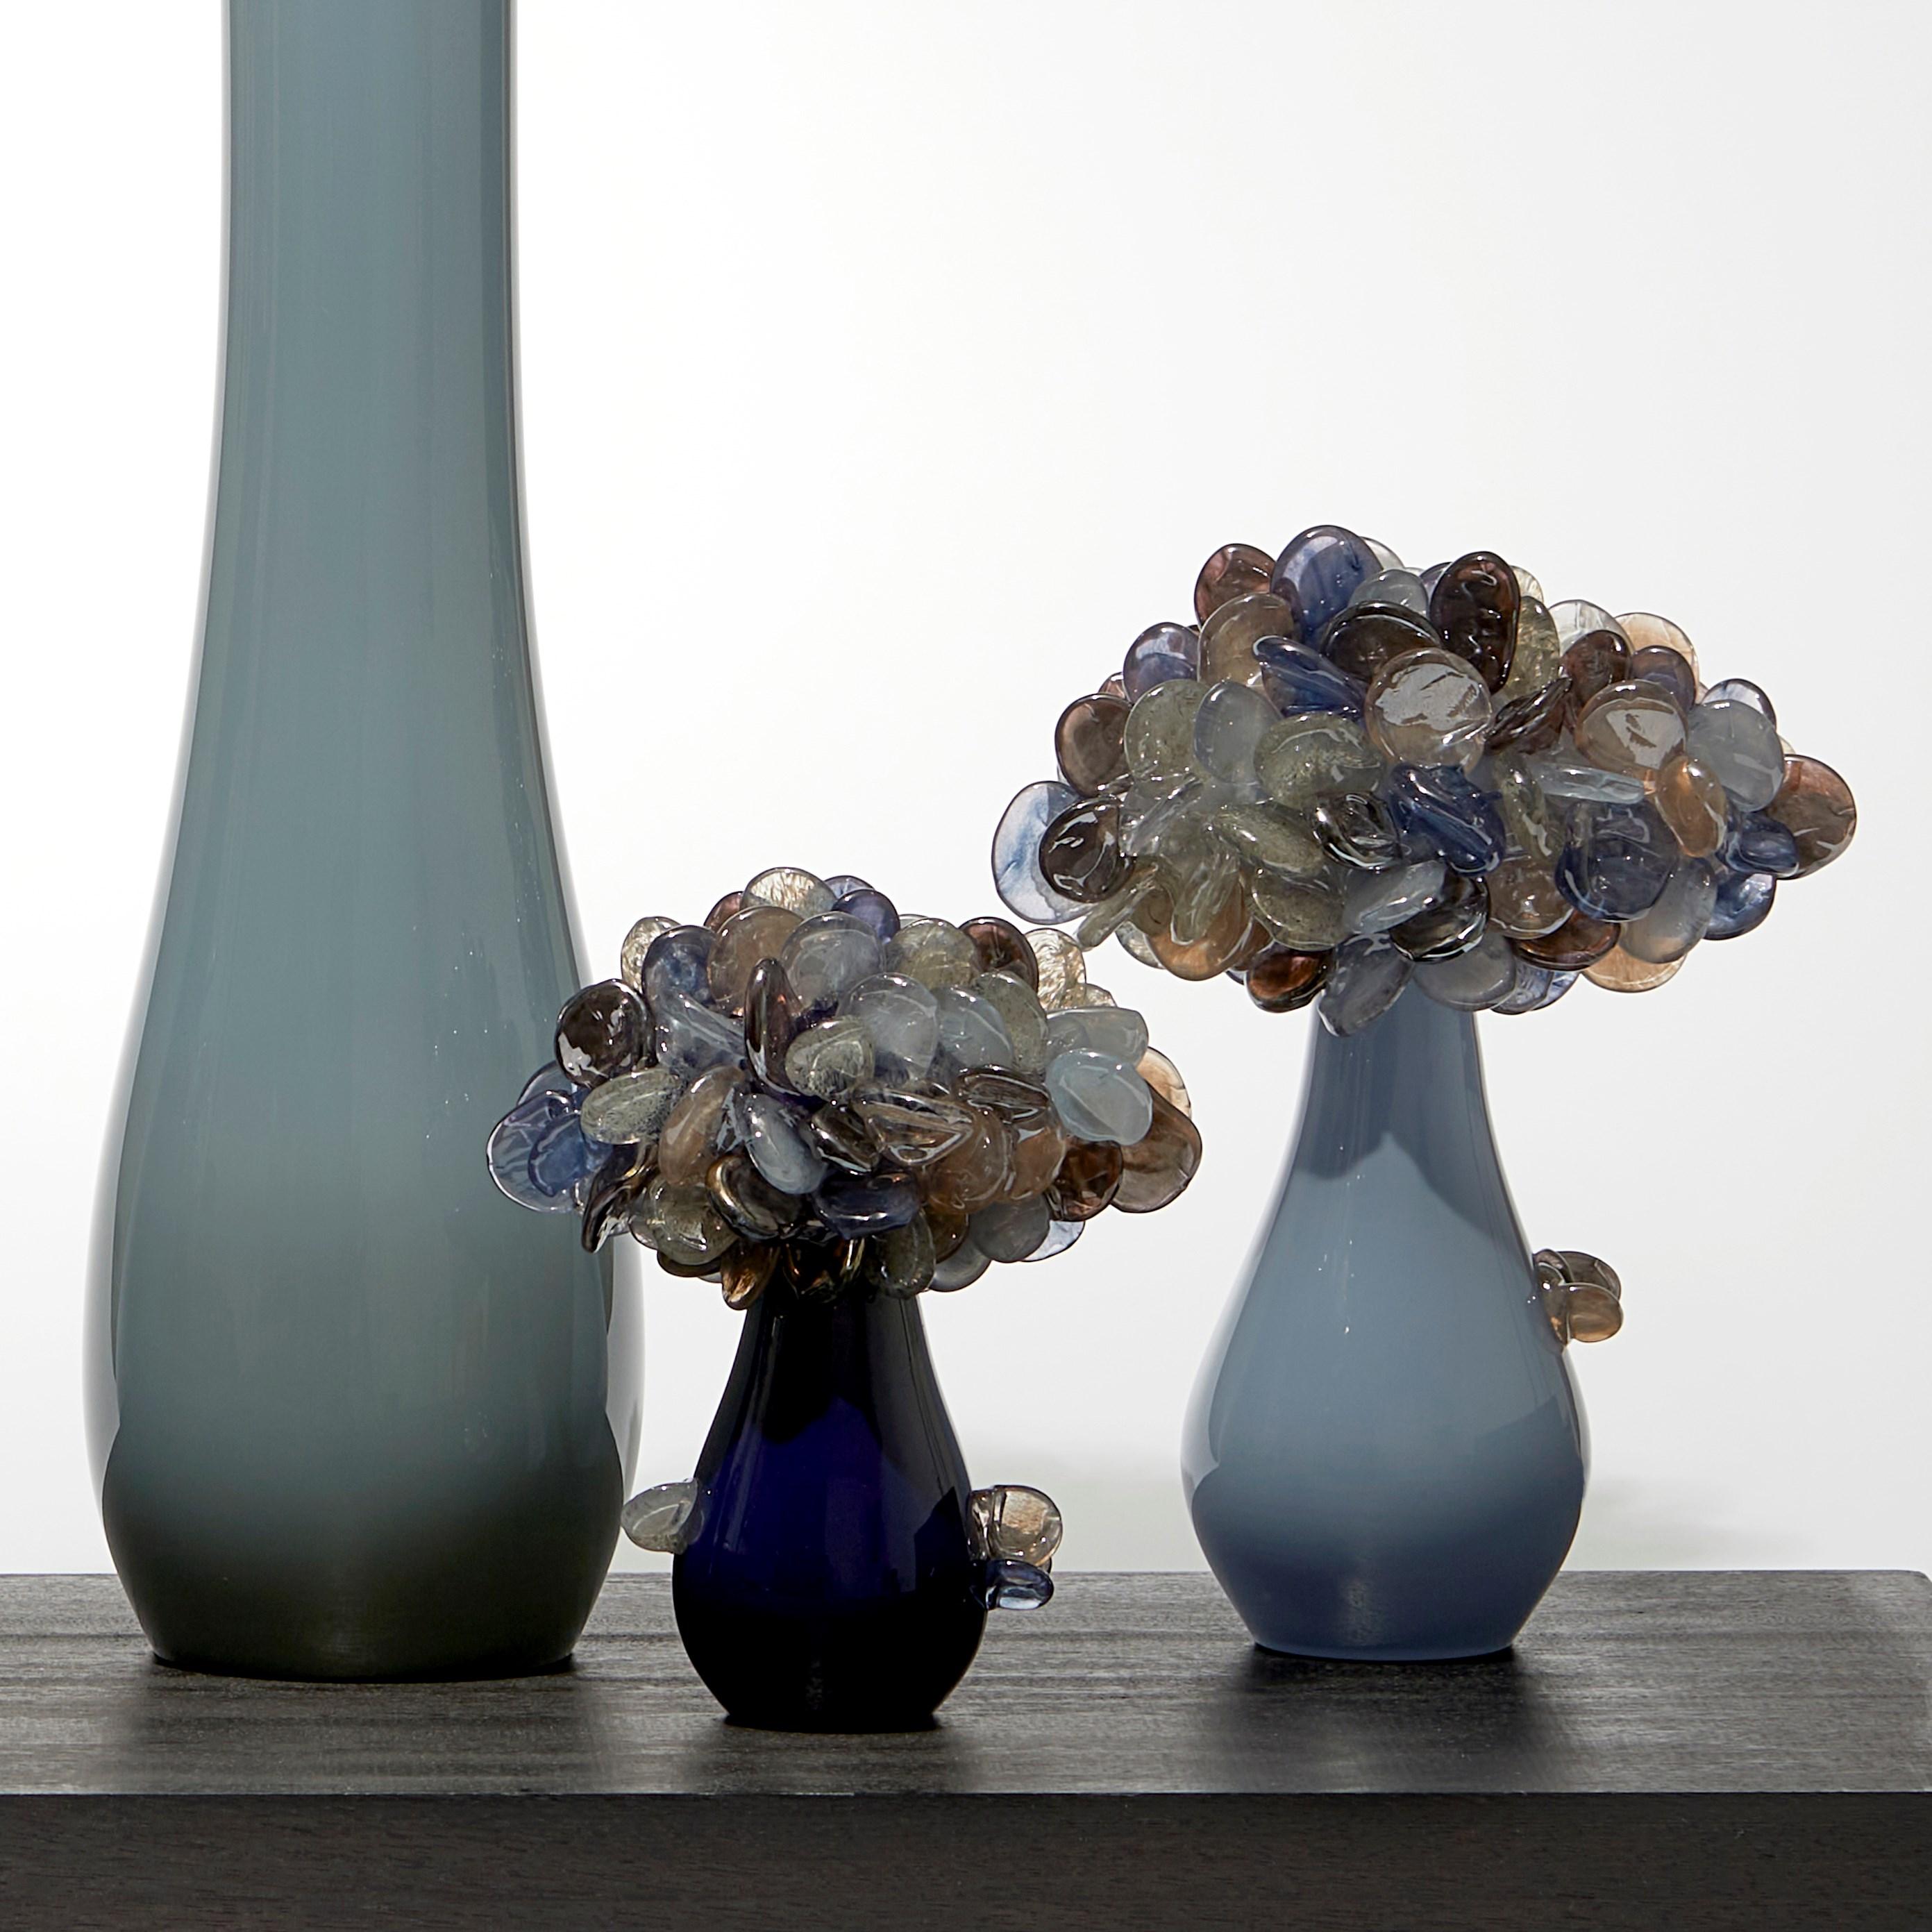 Organic Modern Enchanted Mori Dusk, a tree & bonsai inspired glass artwork by Louis Thompson For Sale